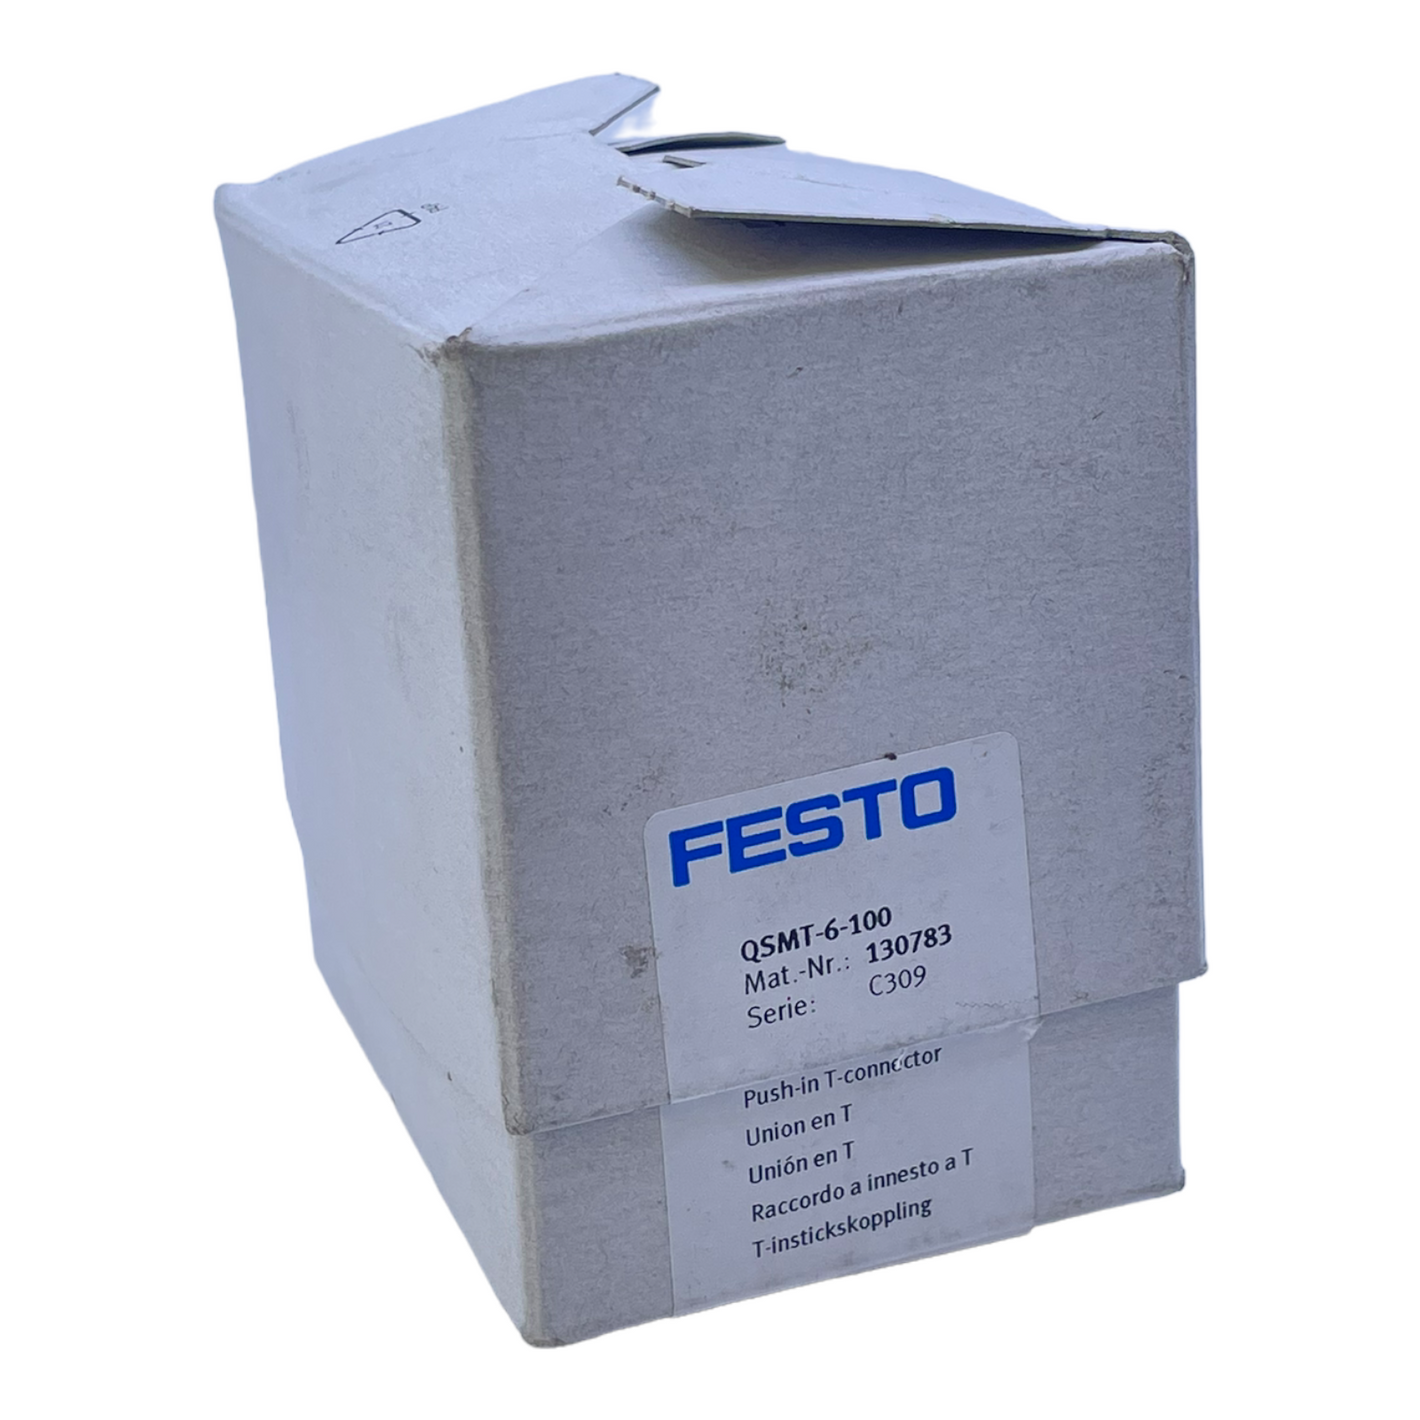 Festo QSMT-6-100 plug connection 130783 -0.95 to 6 bar -0.95 to 14 bar PU:100pcs